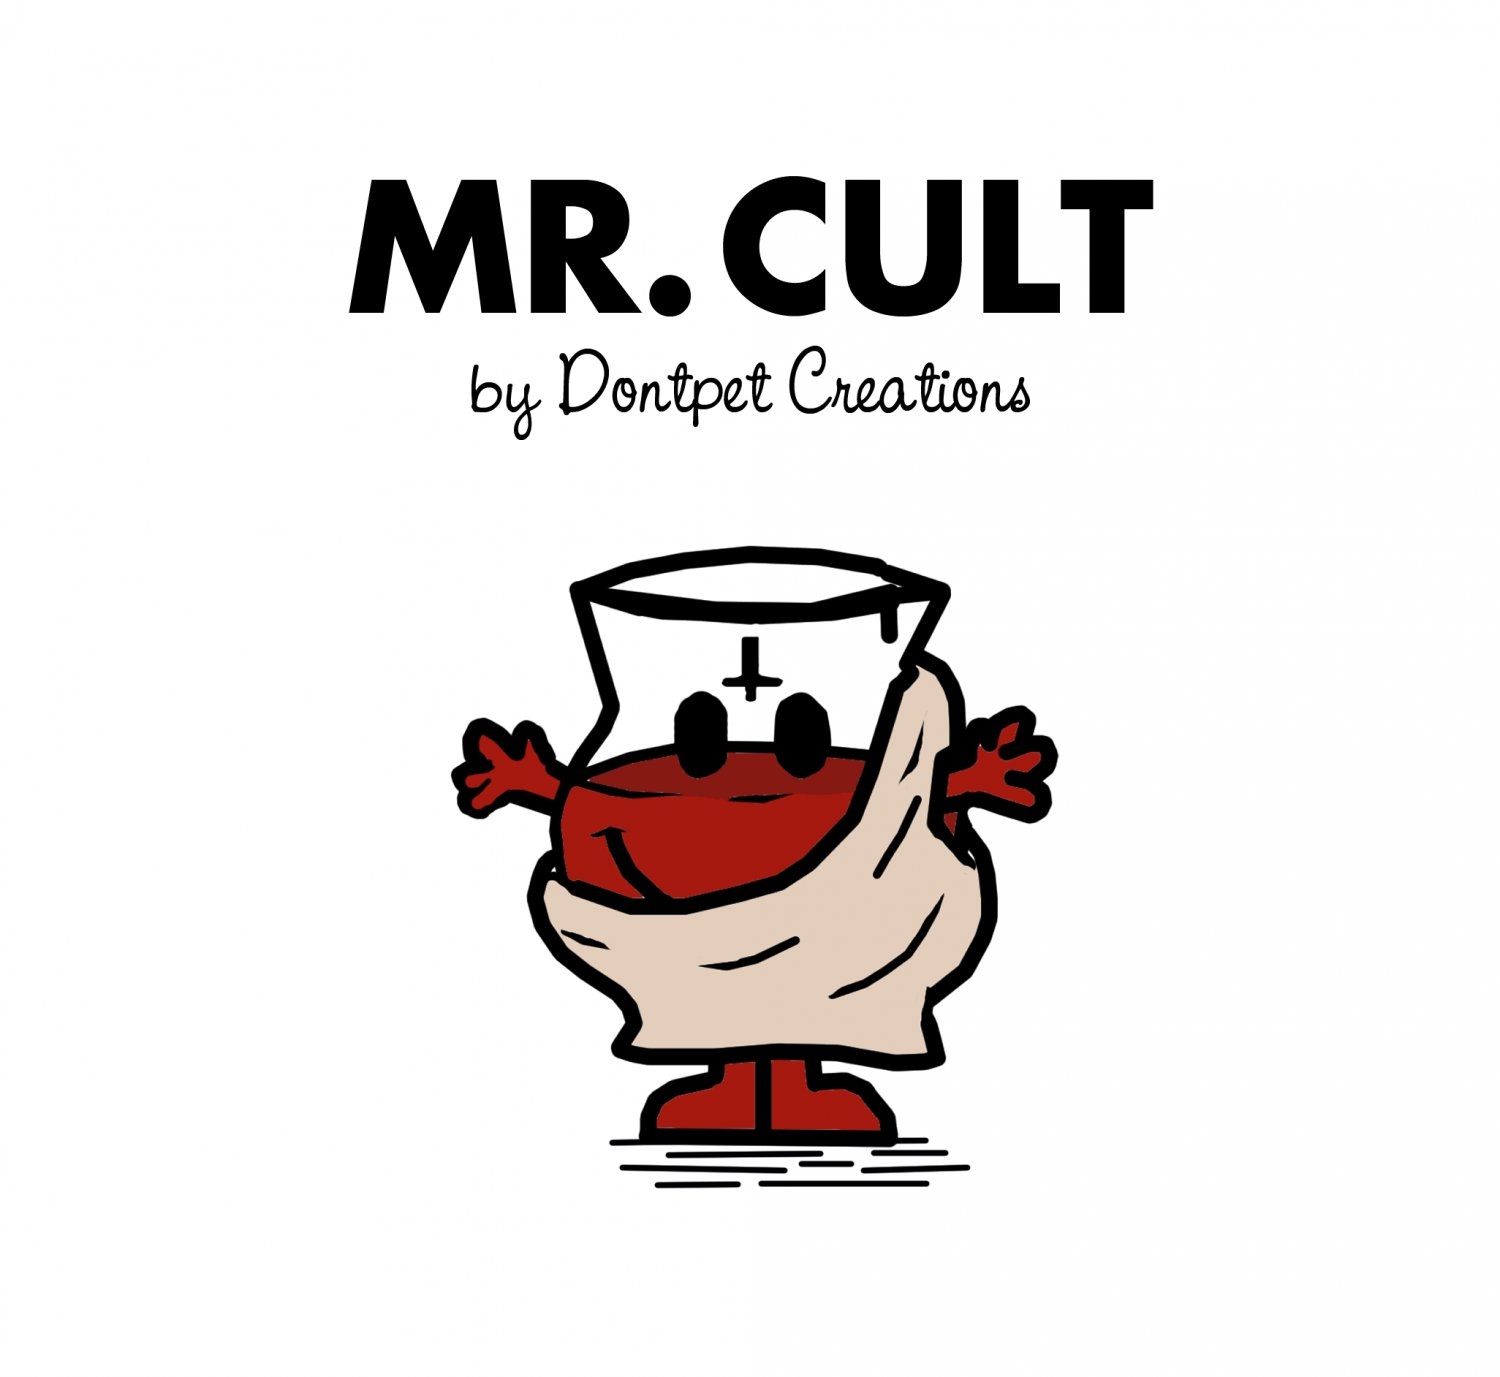 Mr. Cult STICKER - 3"x3"   Glossy, (Mista Men #2)